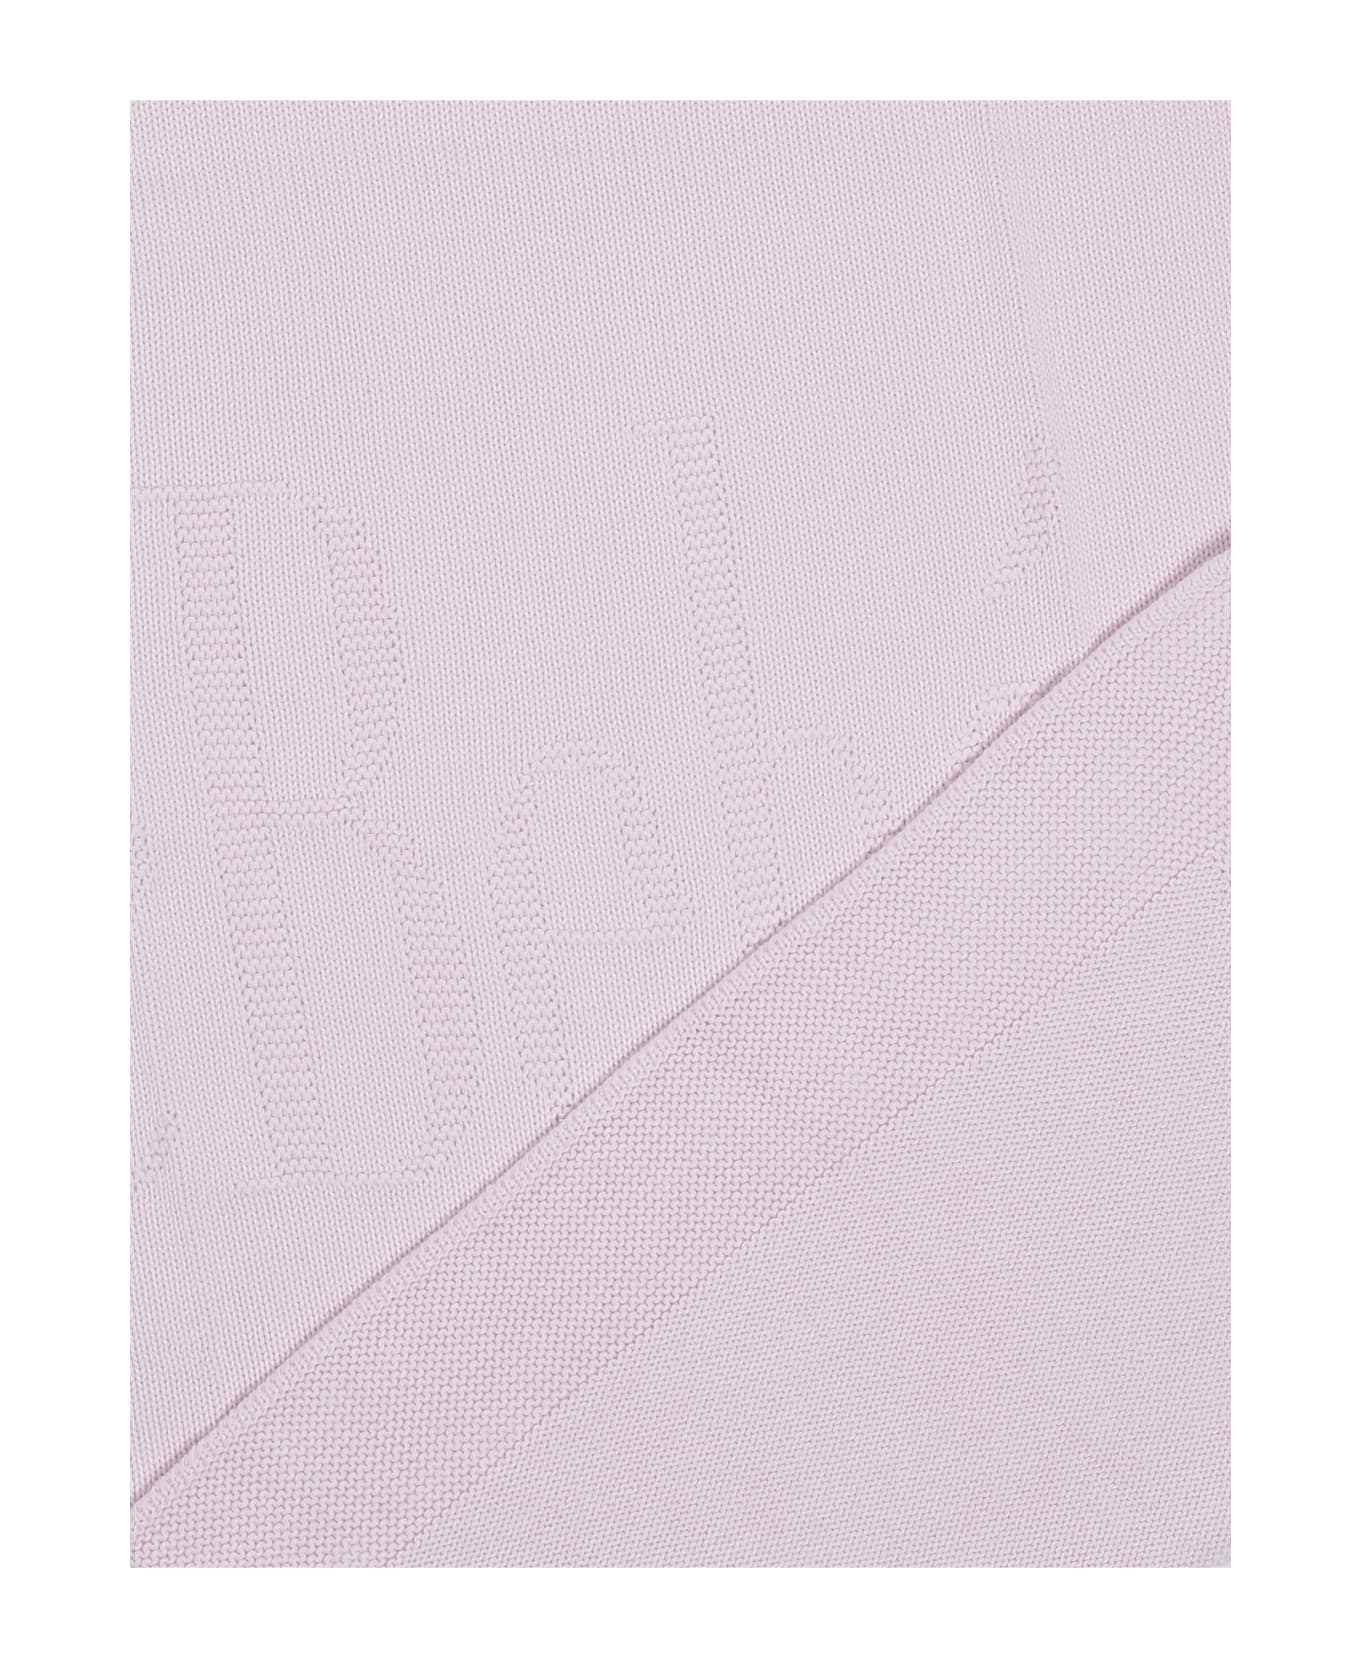 leBebé Blanket Foulard - ROSA